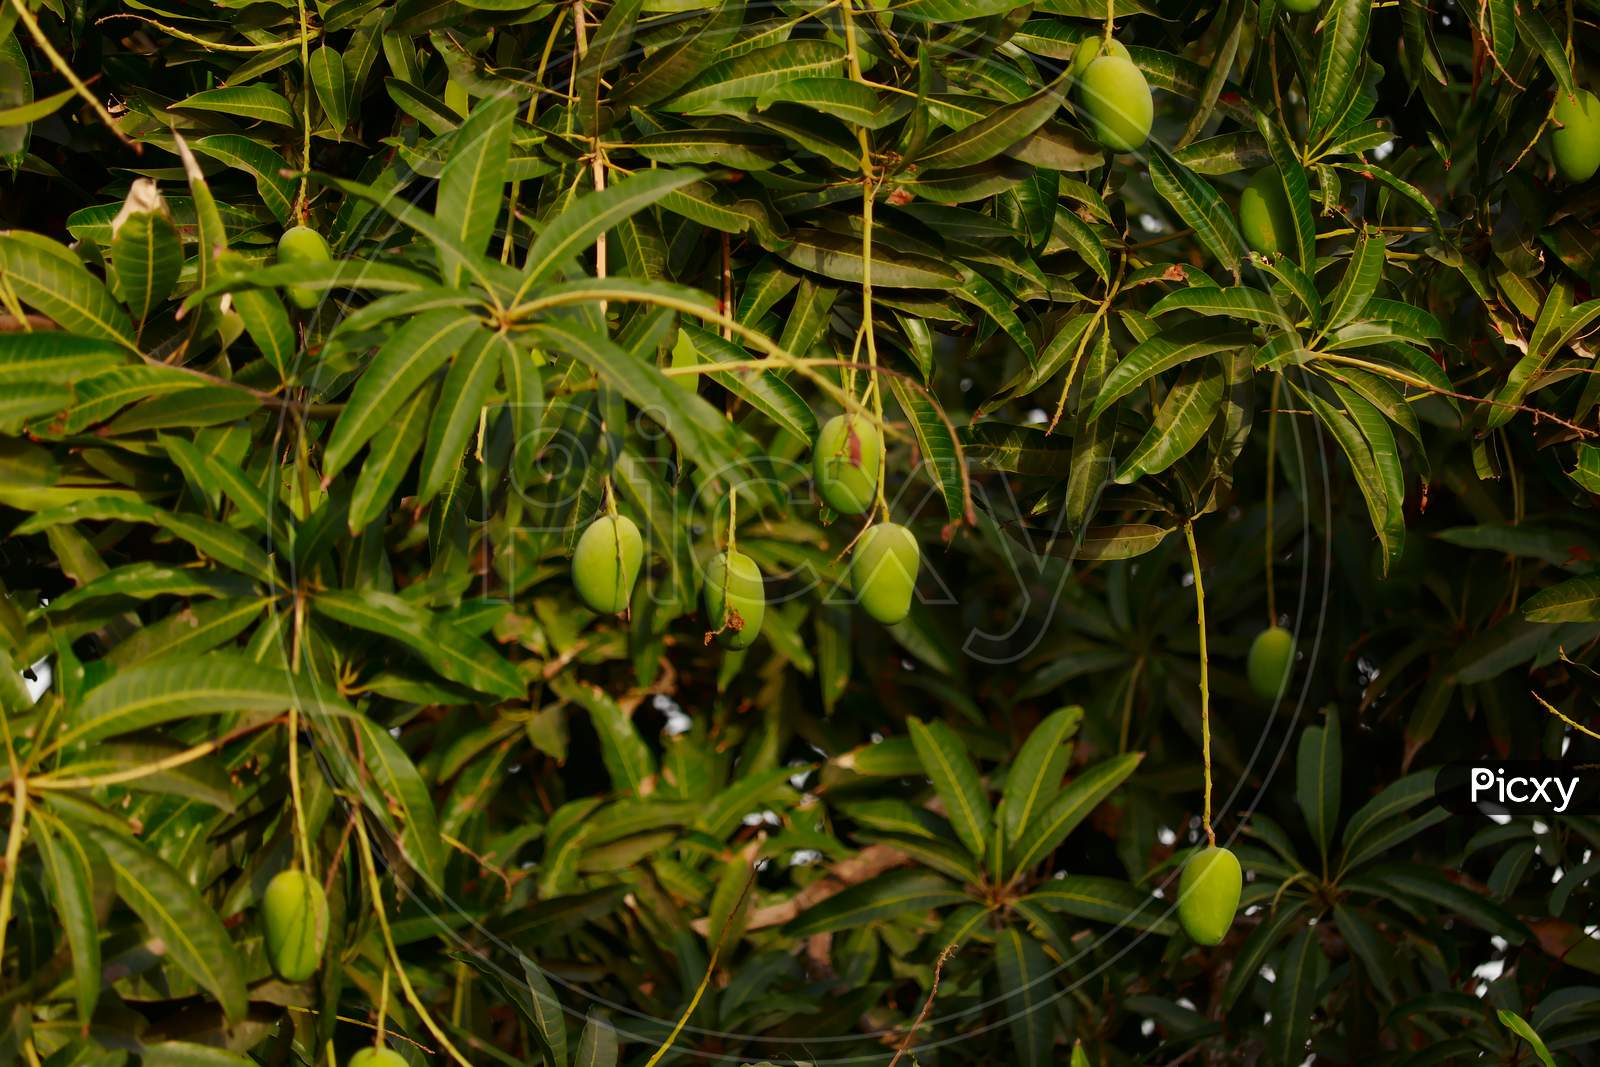 Raw Mango Fruit On The Tree,Mango Orchard And Mango Tree Ready To Harvest,Mango On Tree,Close Up View Of Raw Fruit,Selective Focus